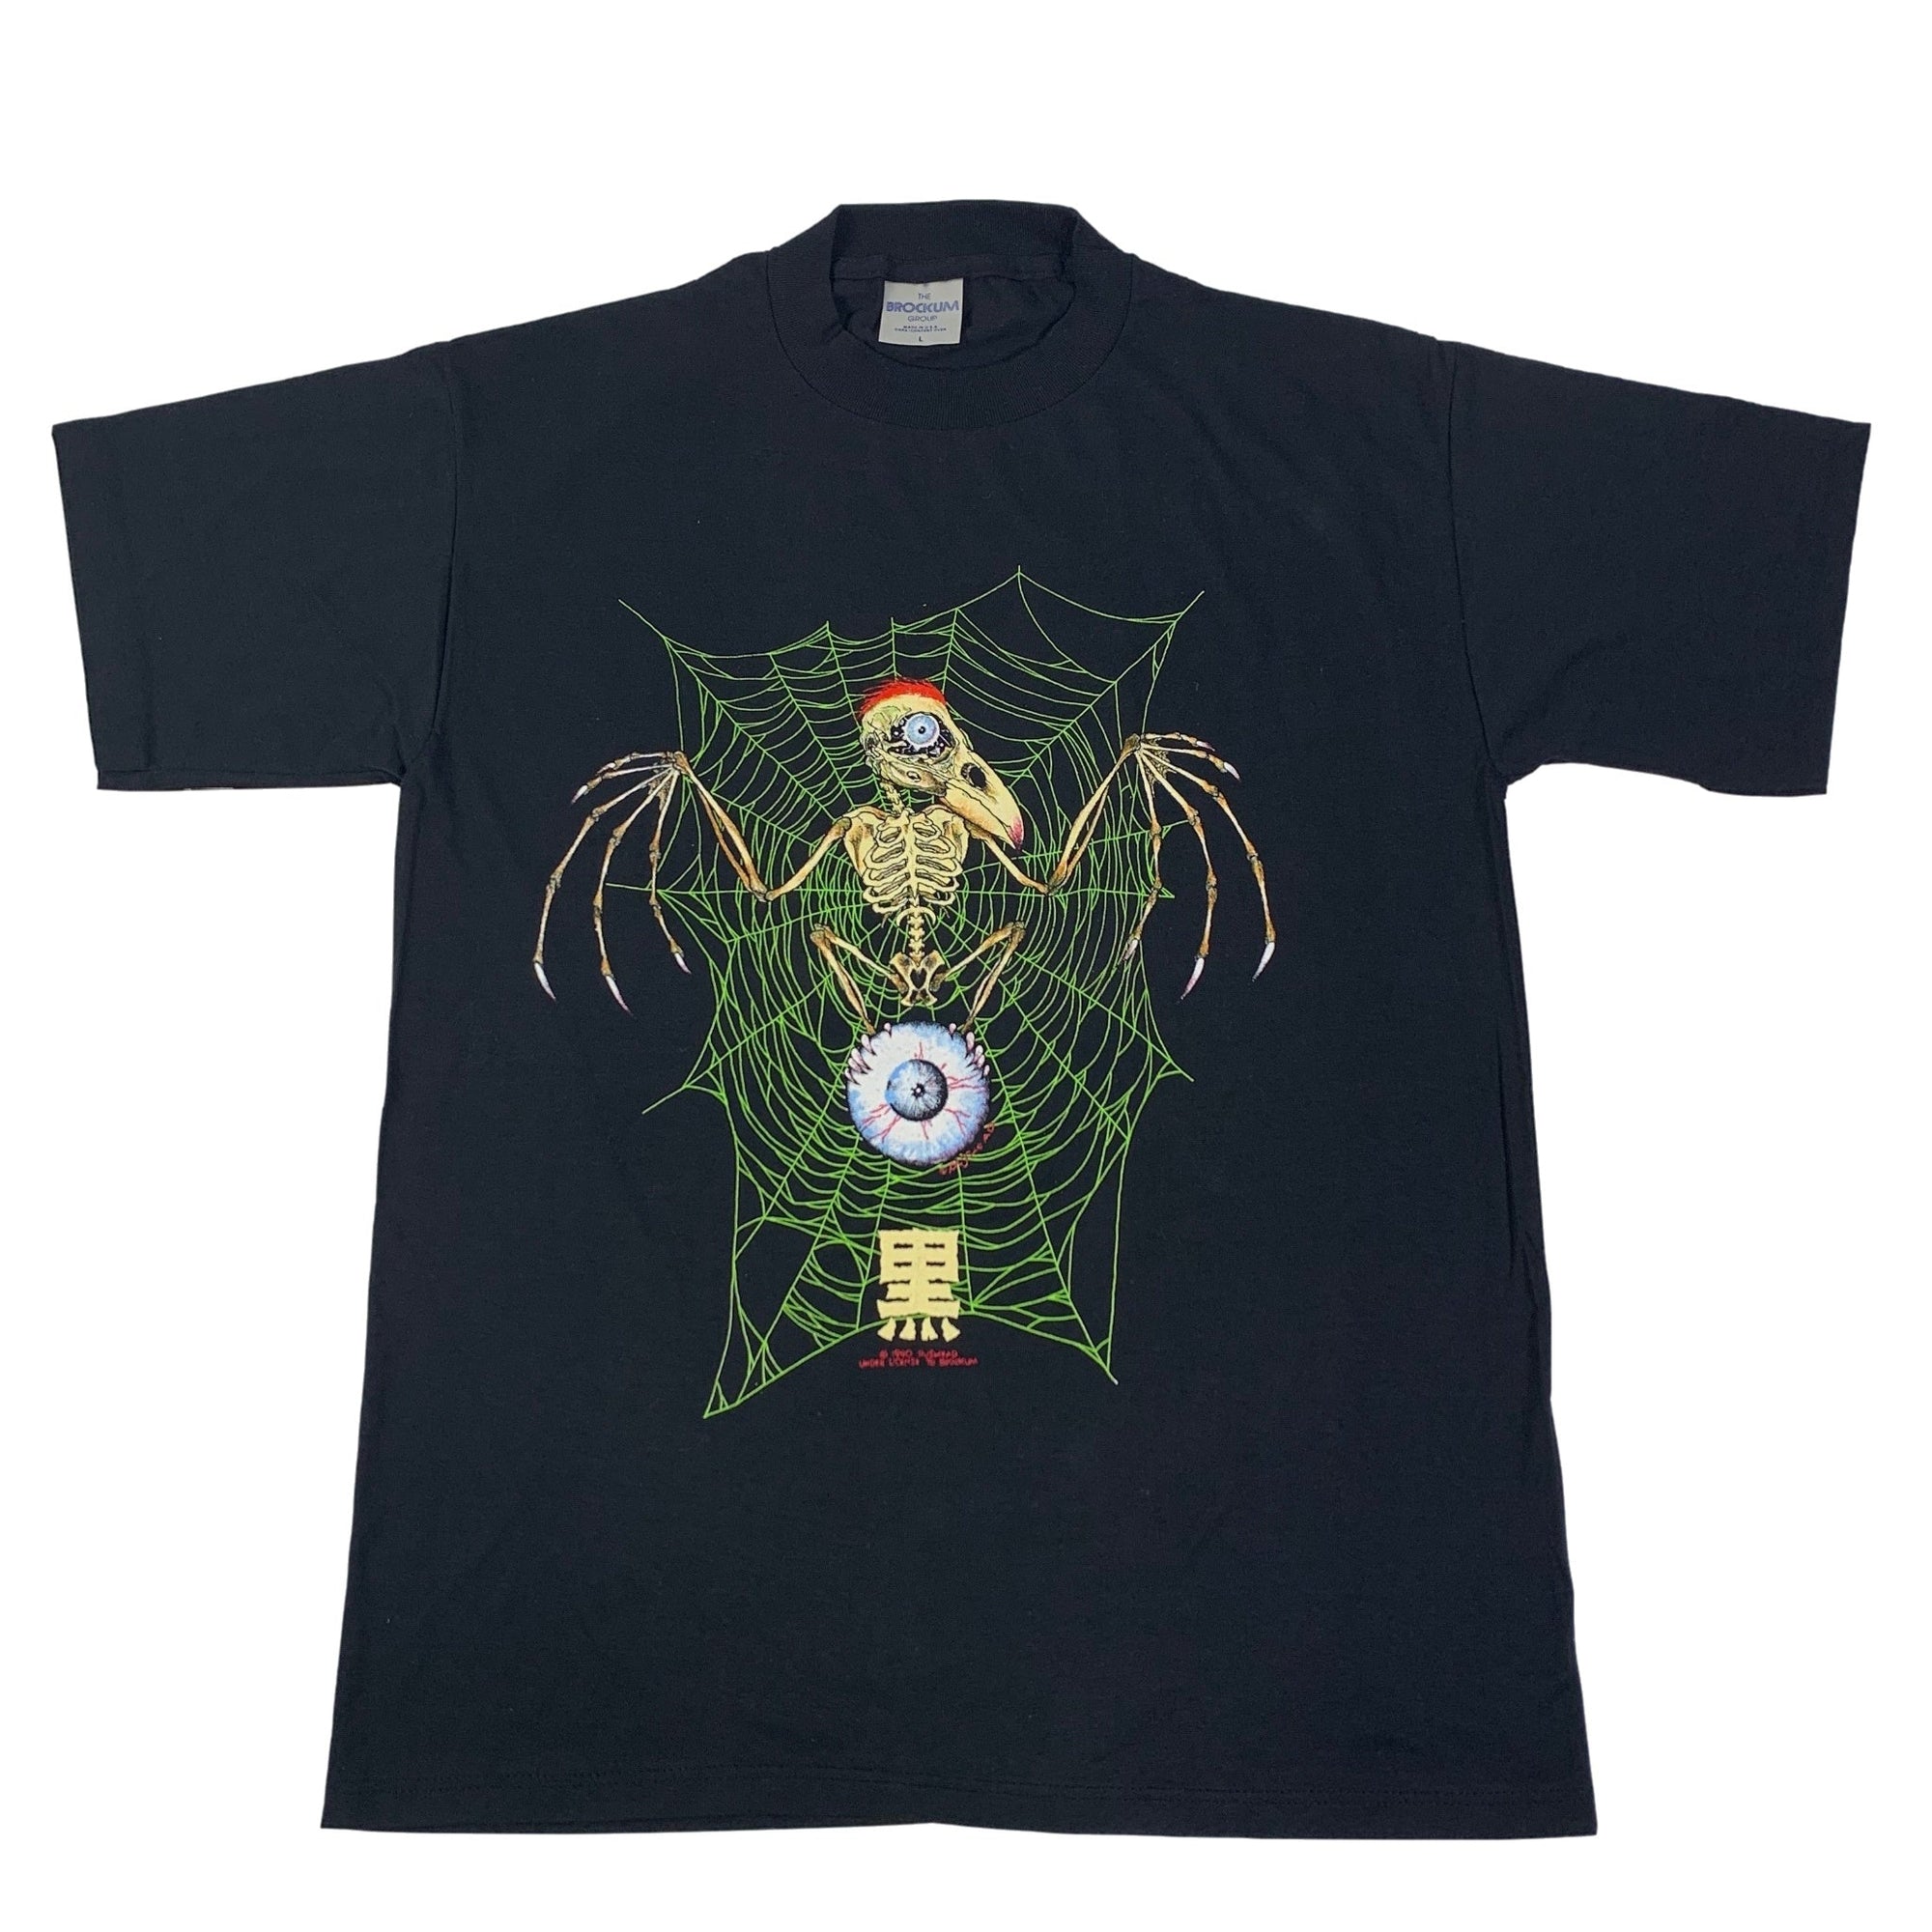 Vintage Pushead "Scarecrow" T-shirt 1990 - jointcustodydc